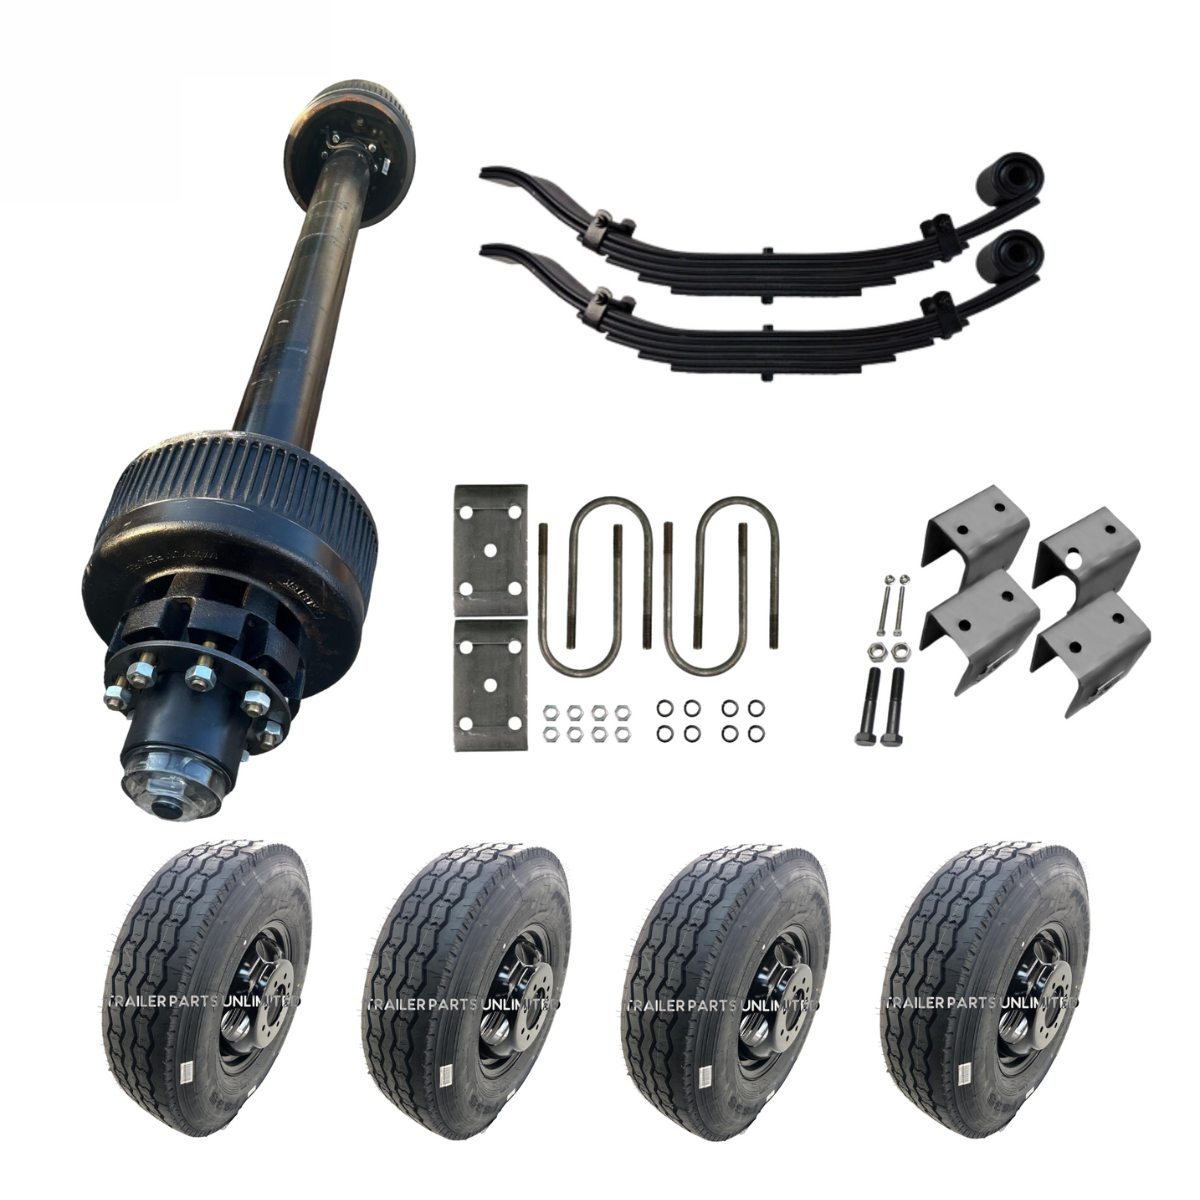 12,000 lb Carter Single Trailer Axle Tire Wheel Kit - 16" Black Duals